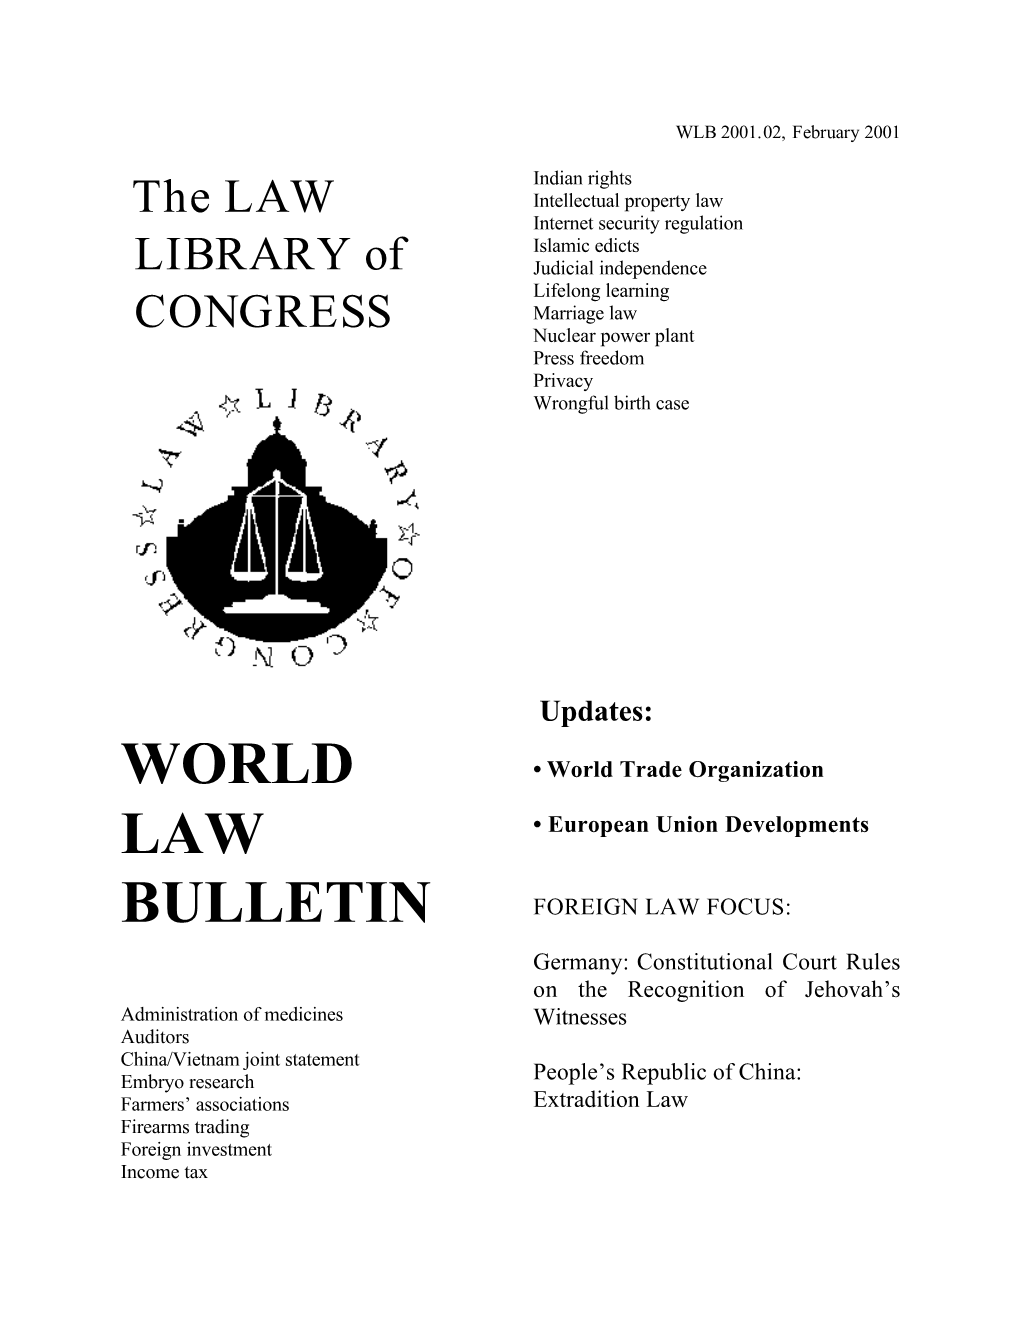 World Law Bulletin, February 2001